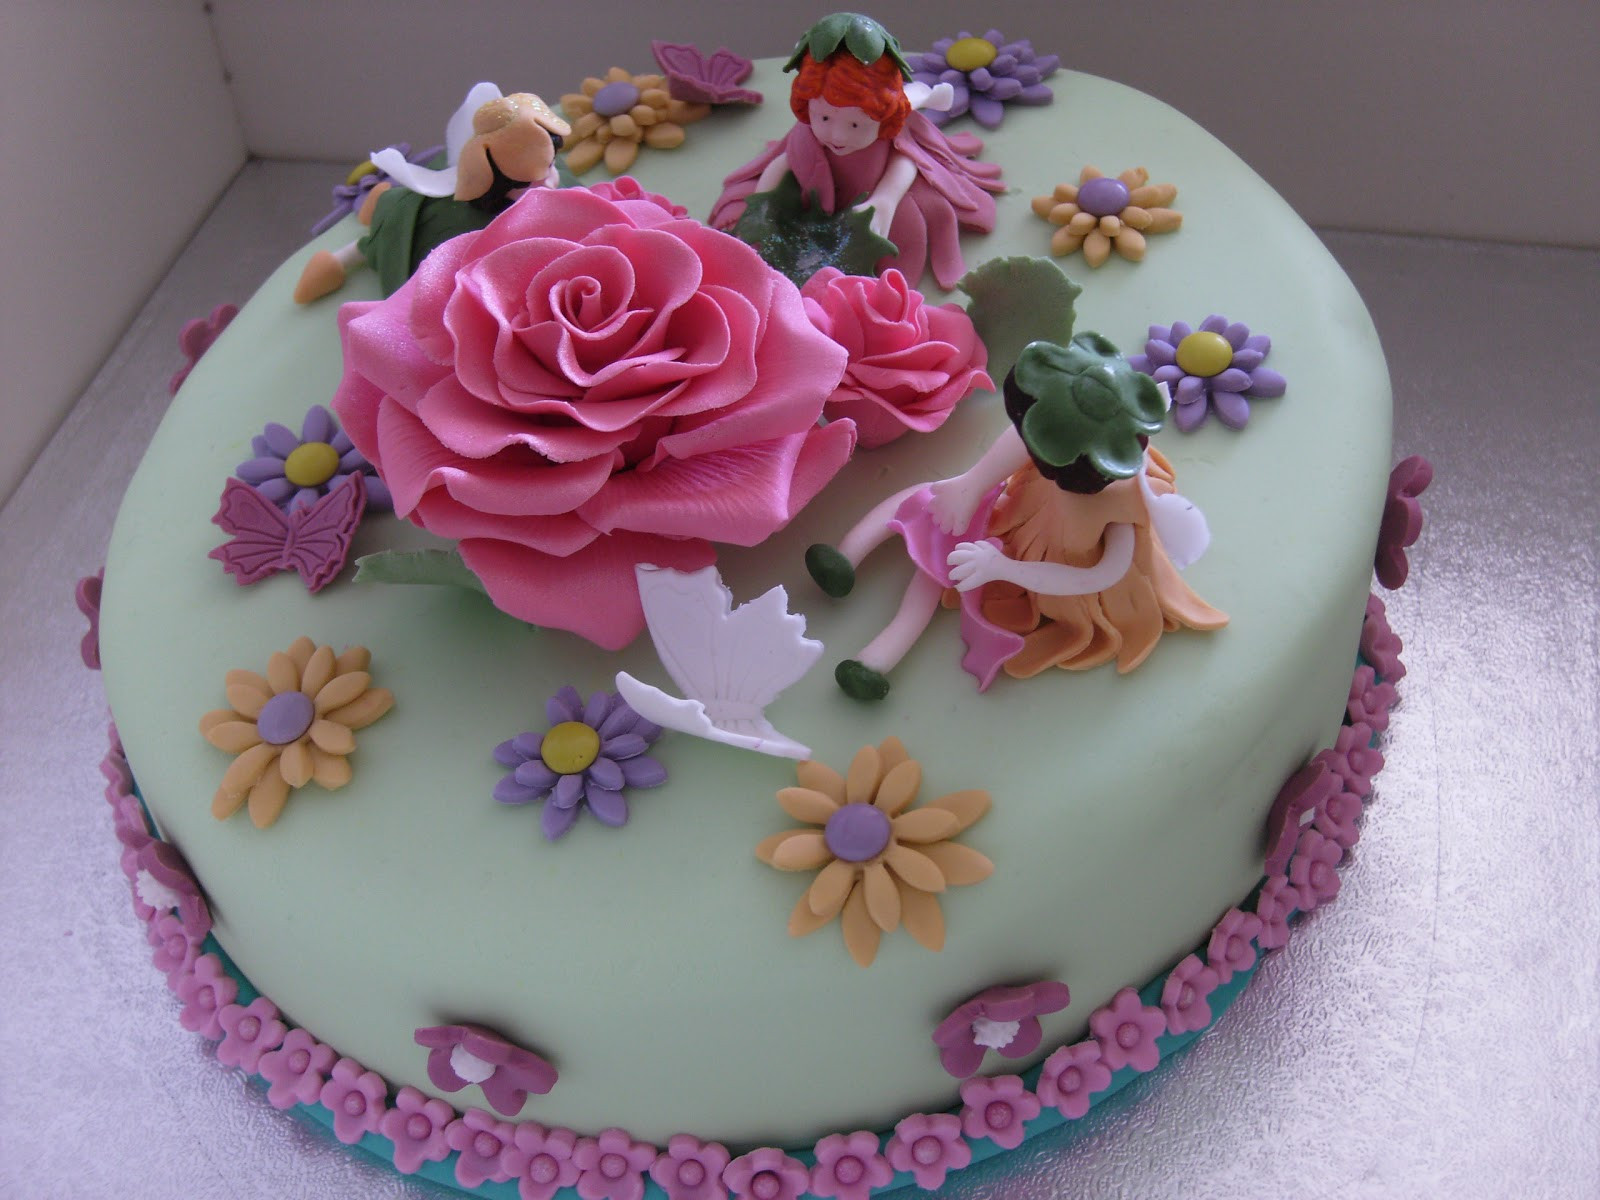 Happy Birthday Cake And Flowers
 Flower Fairy Birthday Cake Party and Ma ra Cake Recipe